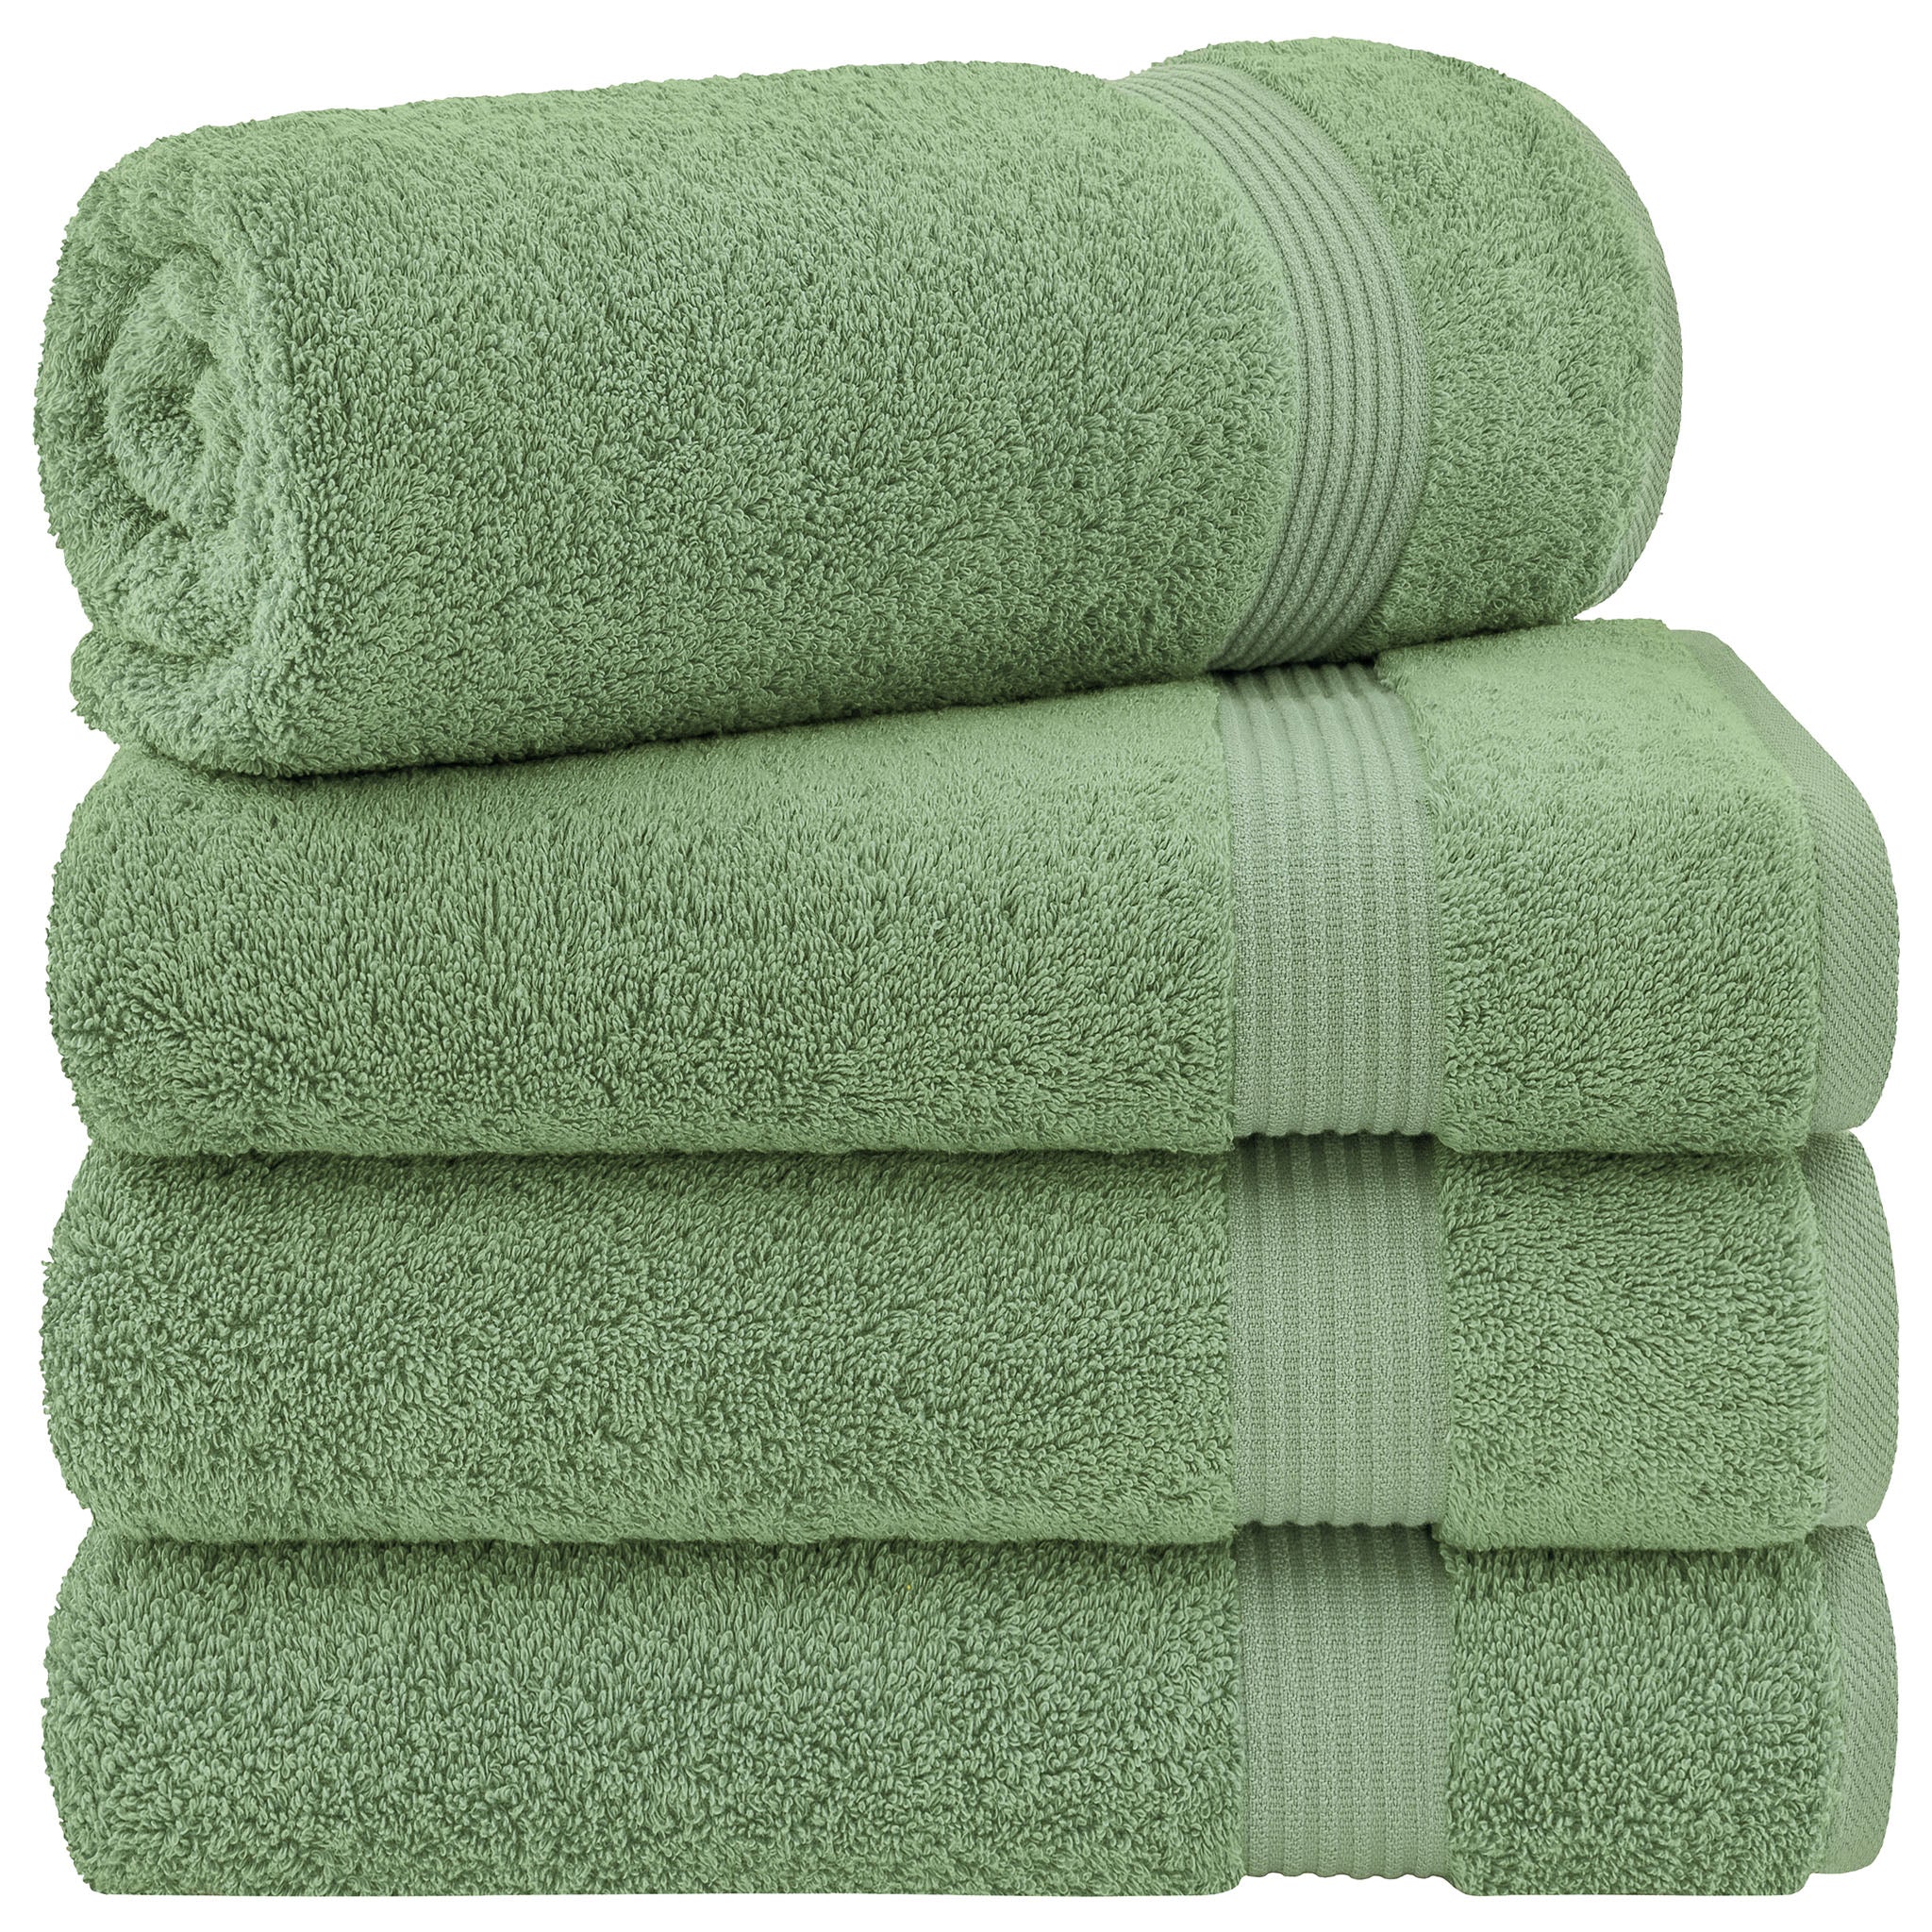 American Soft Linen Bekos 100% Cotton Turkish Towels, 4 Piece Bath Towel Set -sage-green-01